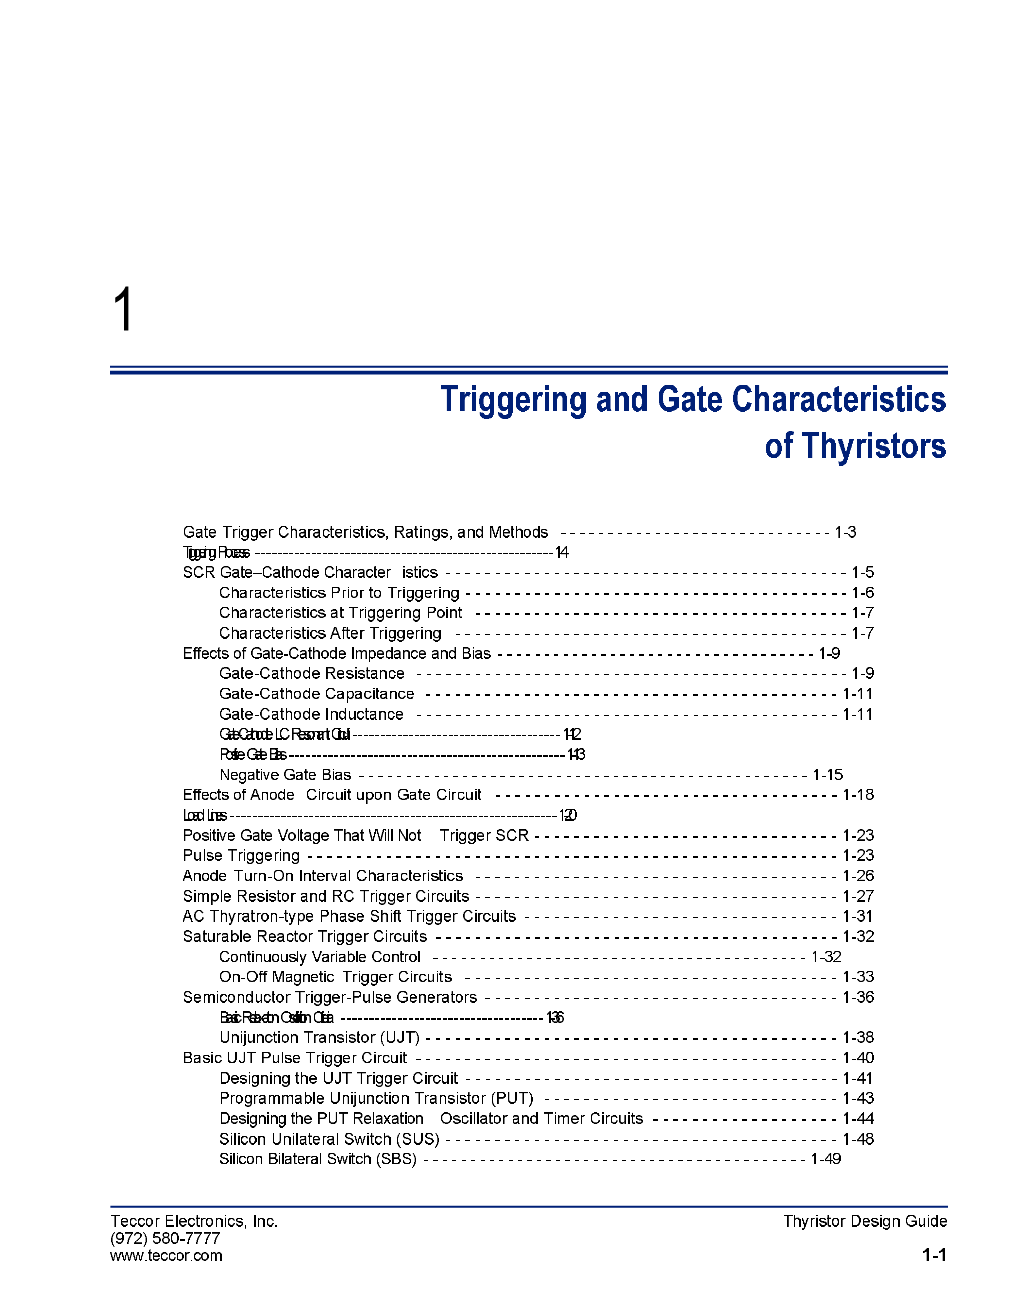 Triggering and Gate Characteristics of Thyristors